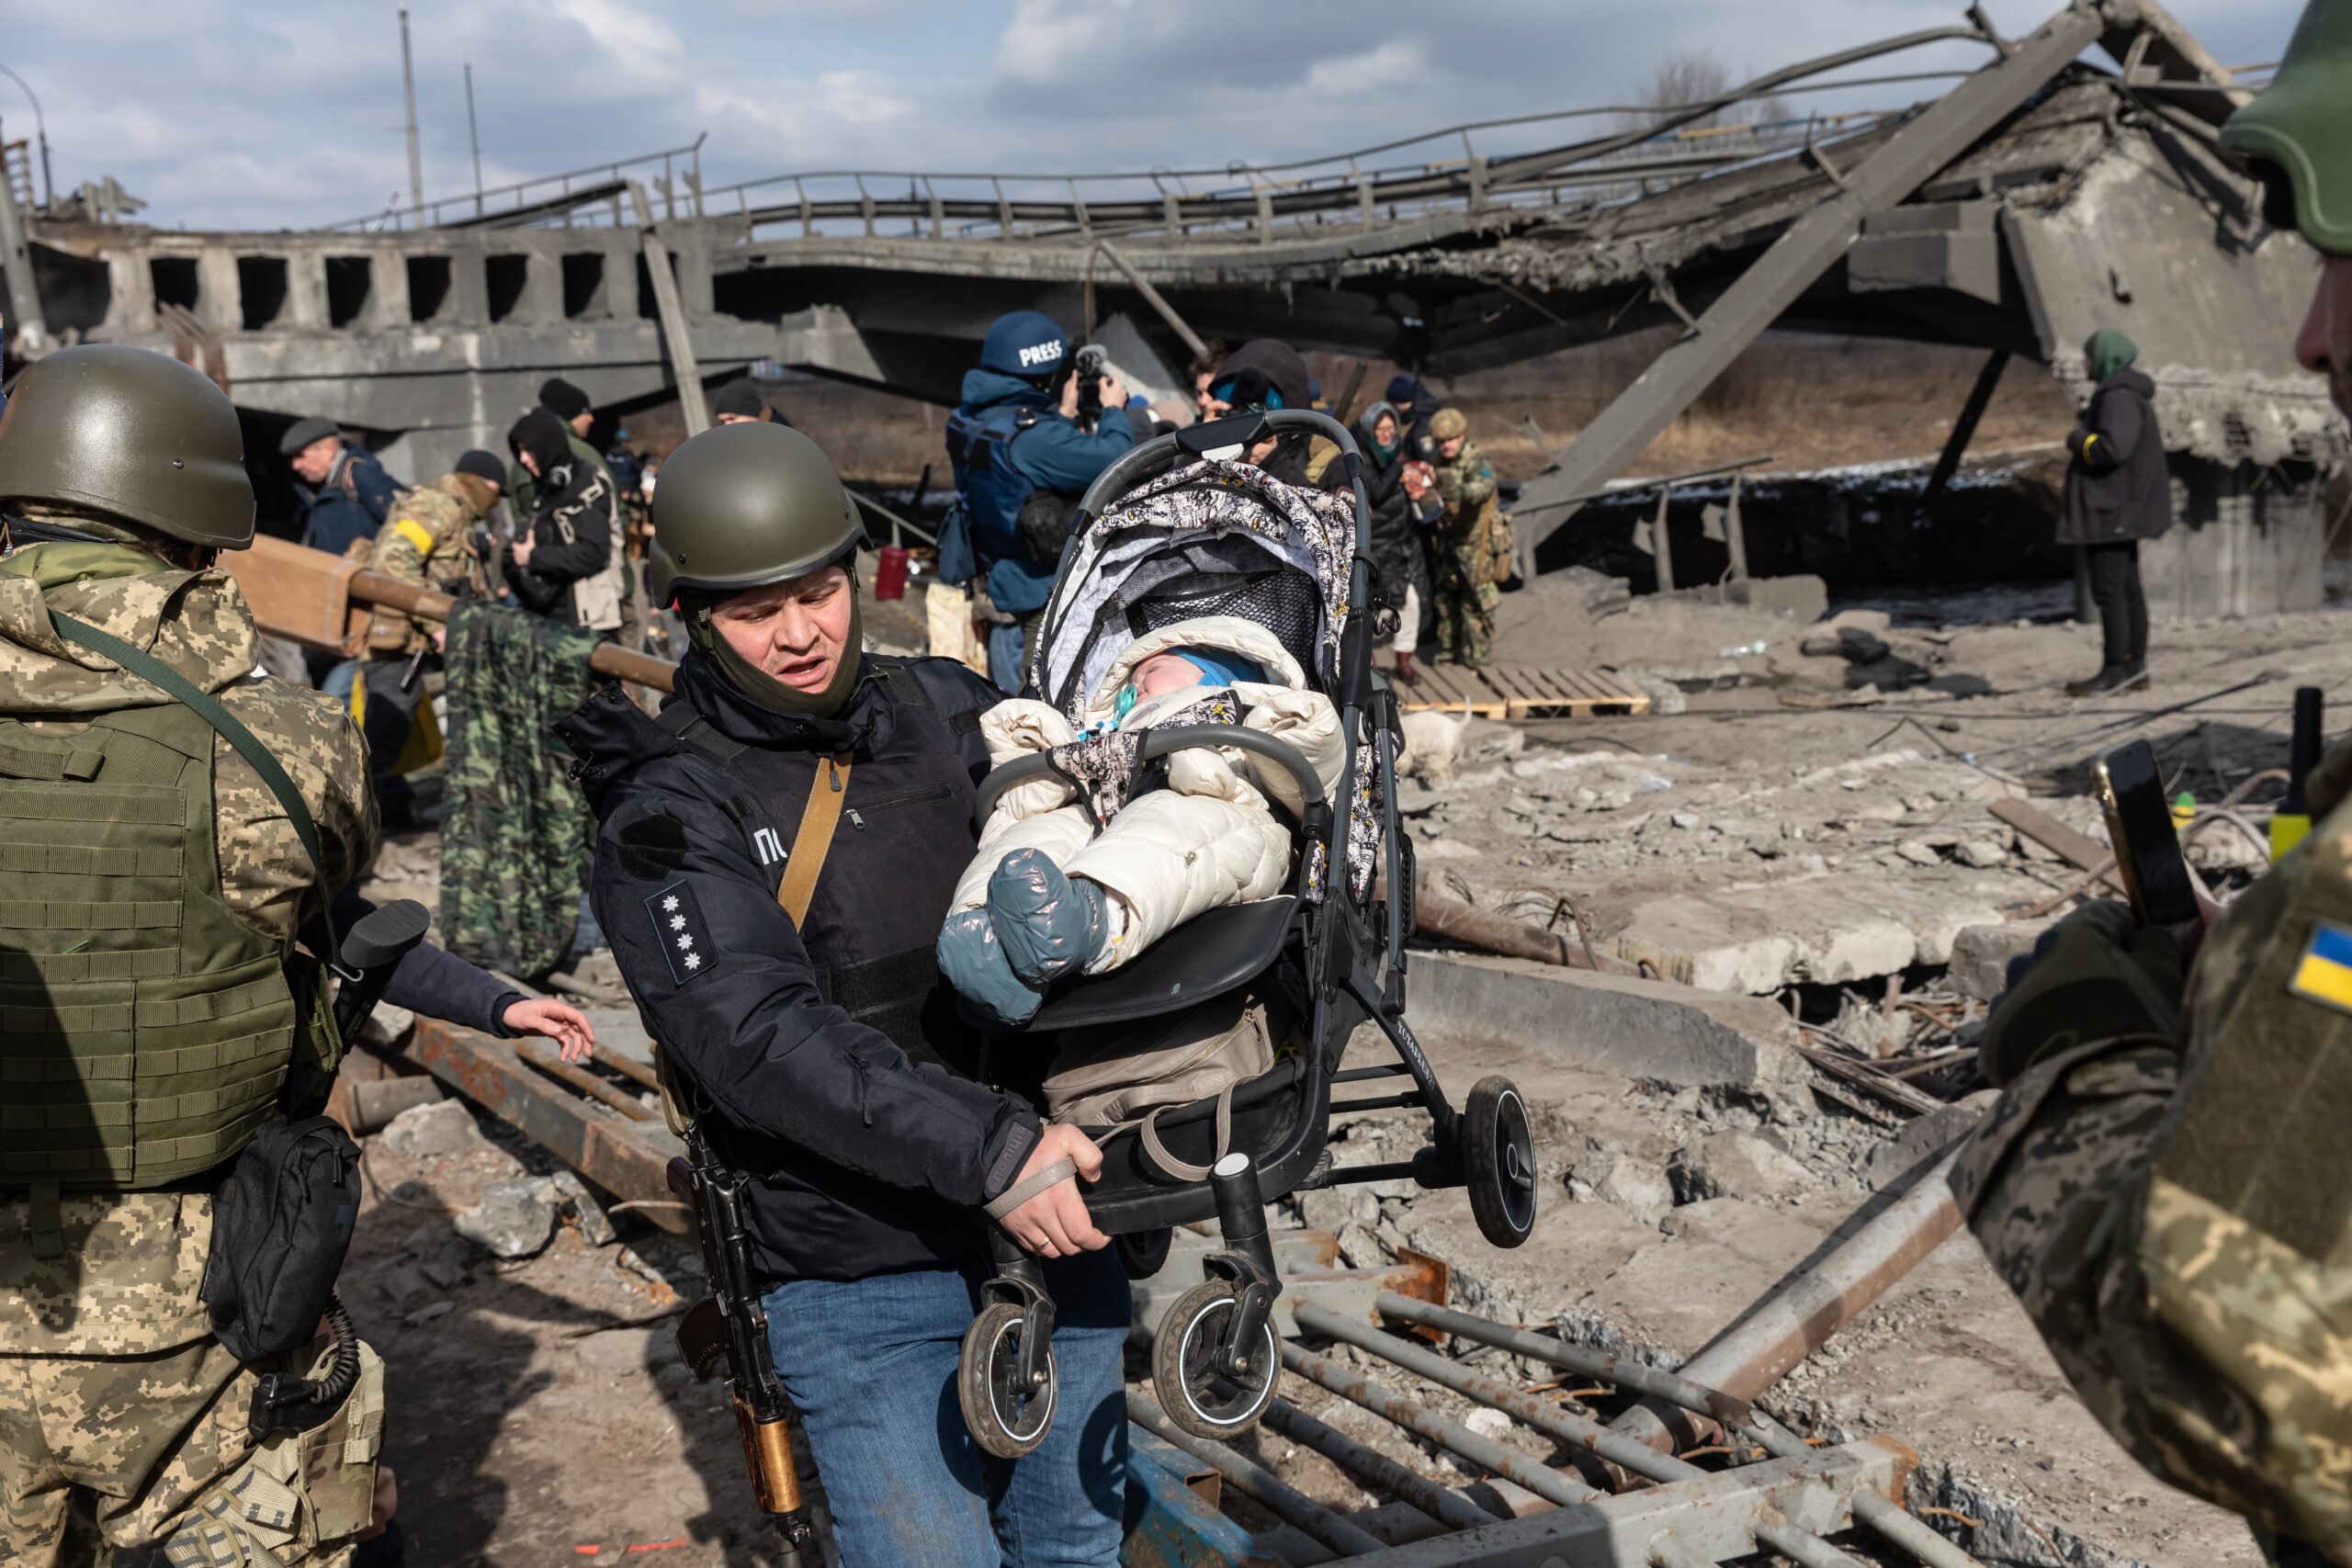 Ucraina: nuovo anno sotto i raid a Kiev. Zelensky: “Nel 2023 auguro vittoria”